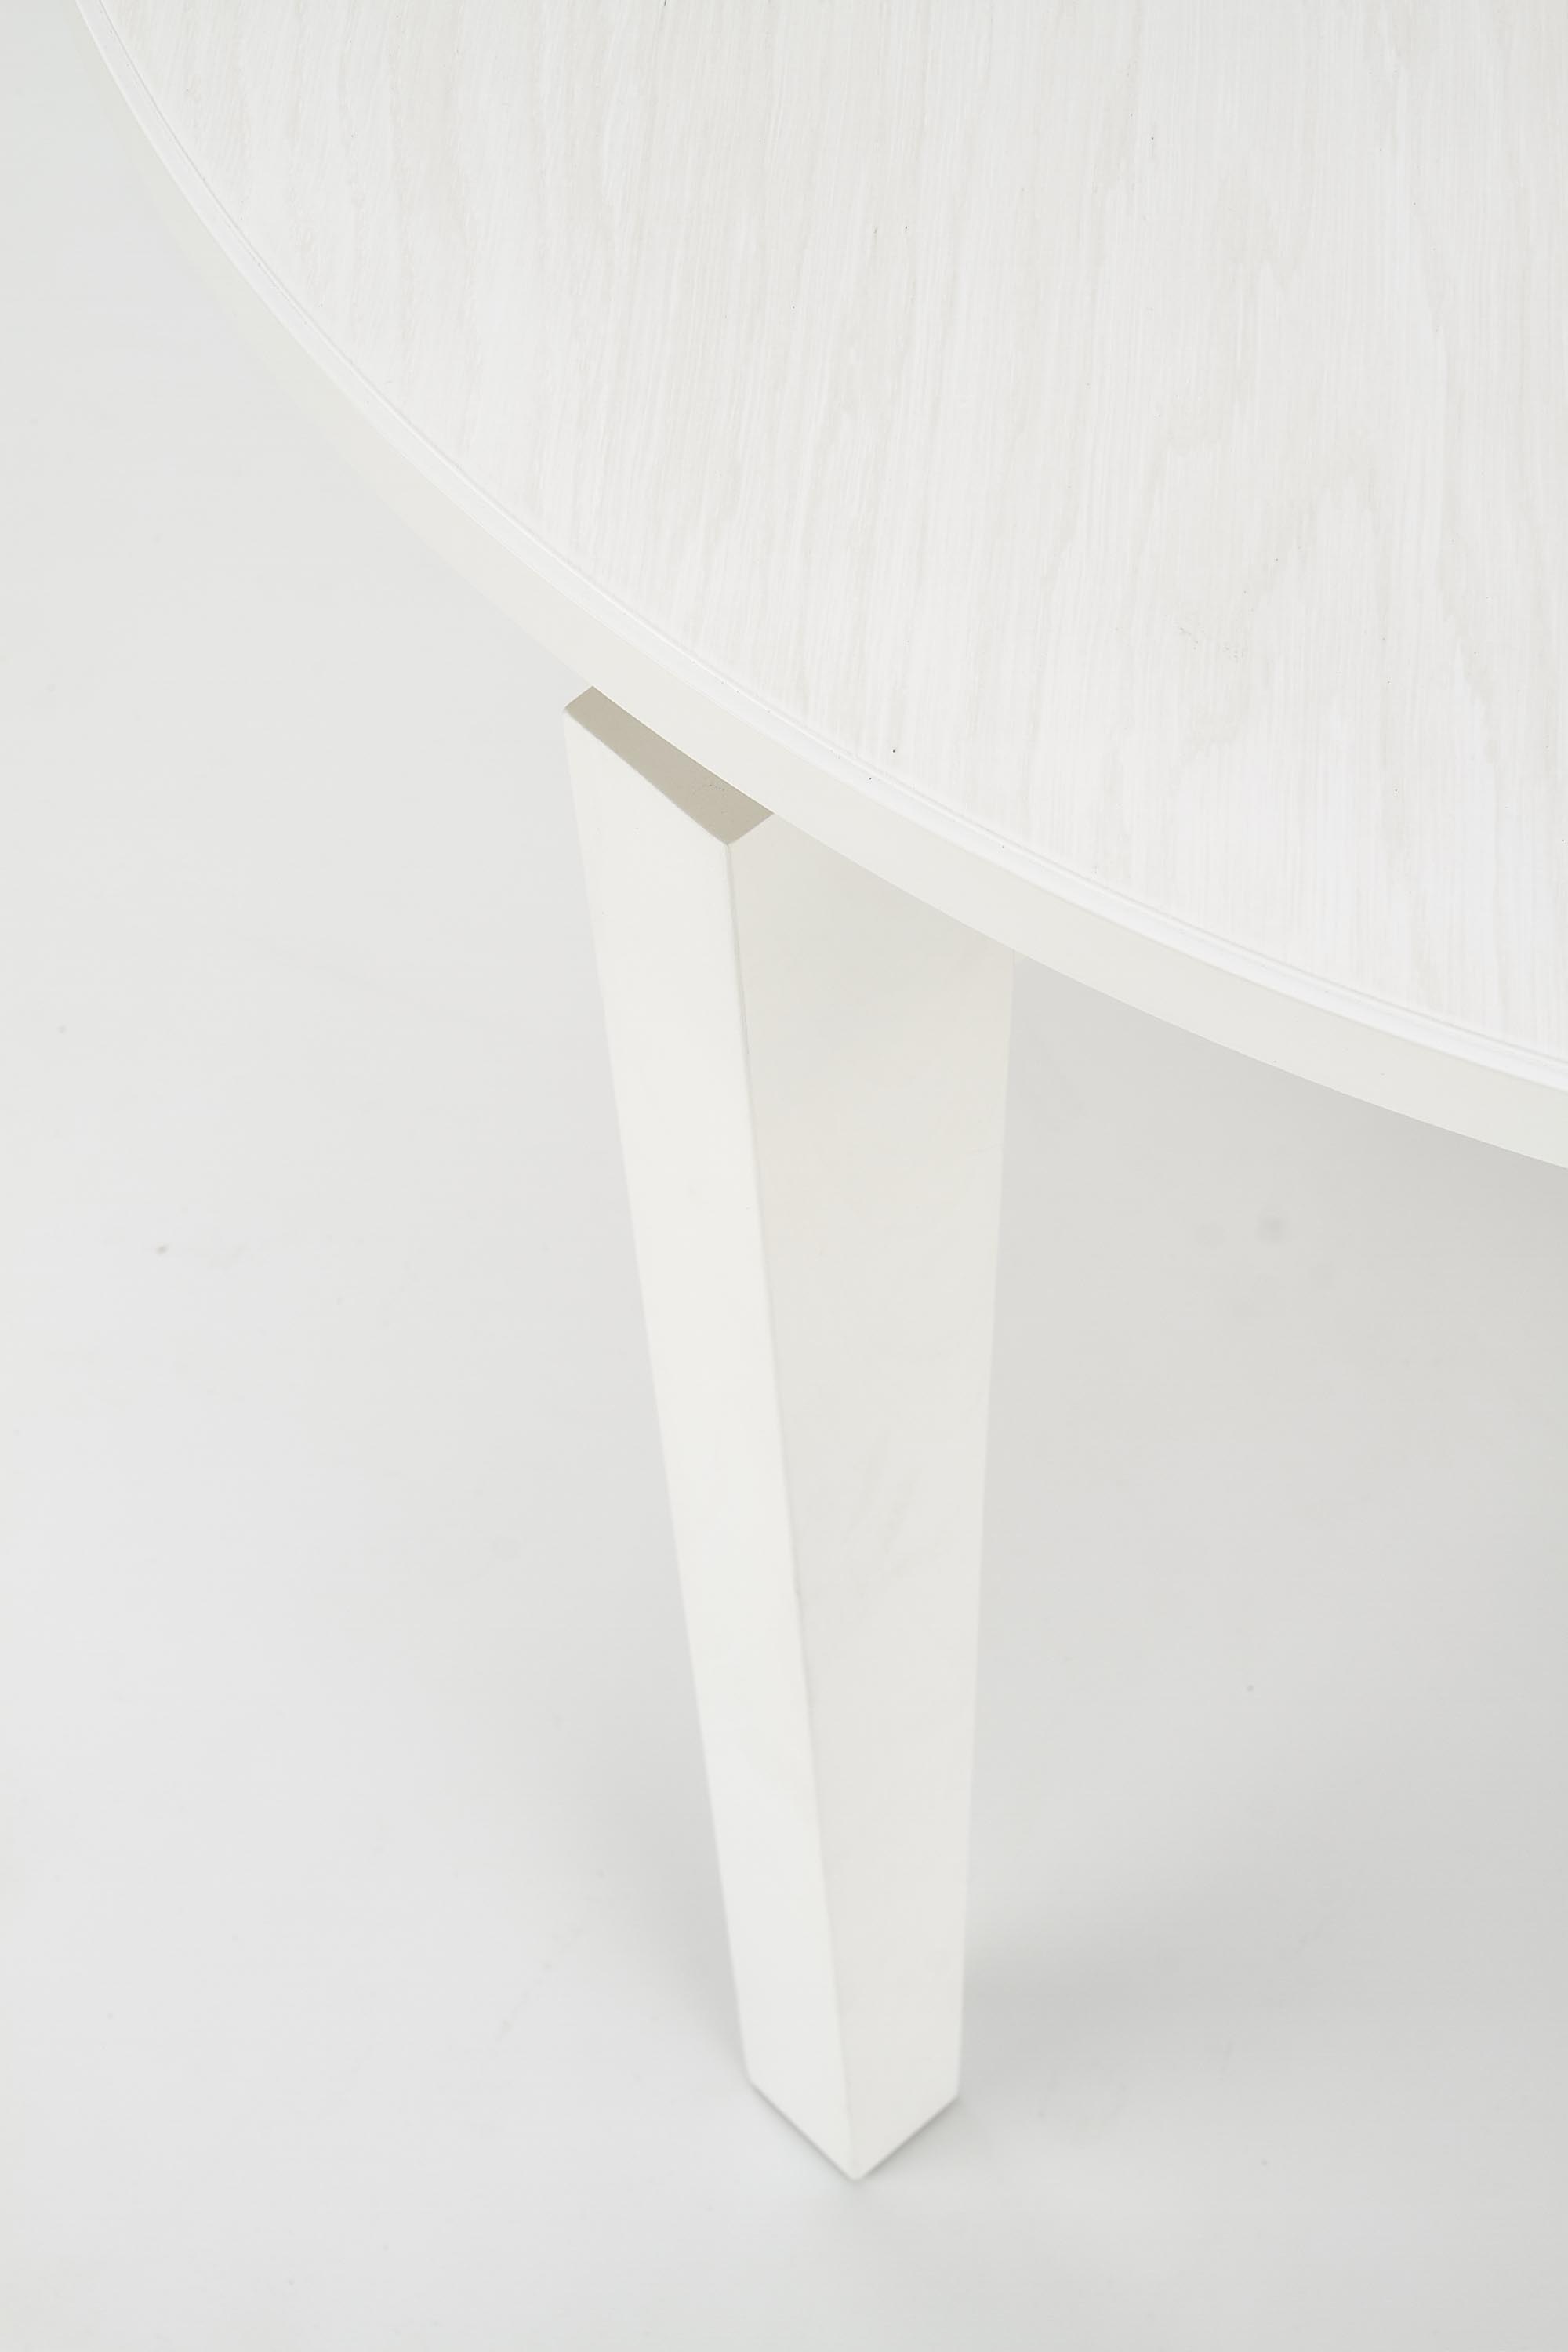 stôl rozkládací Sorbus - Biely Stôl rozkladany sorbus - Biely